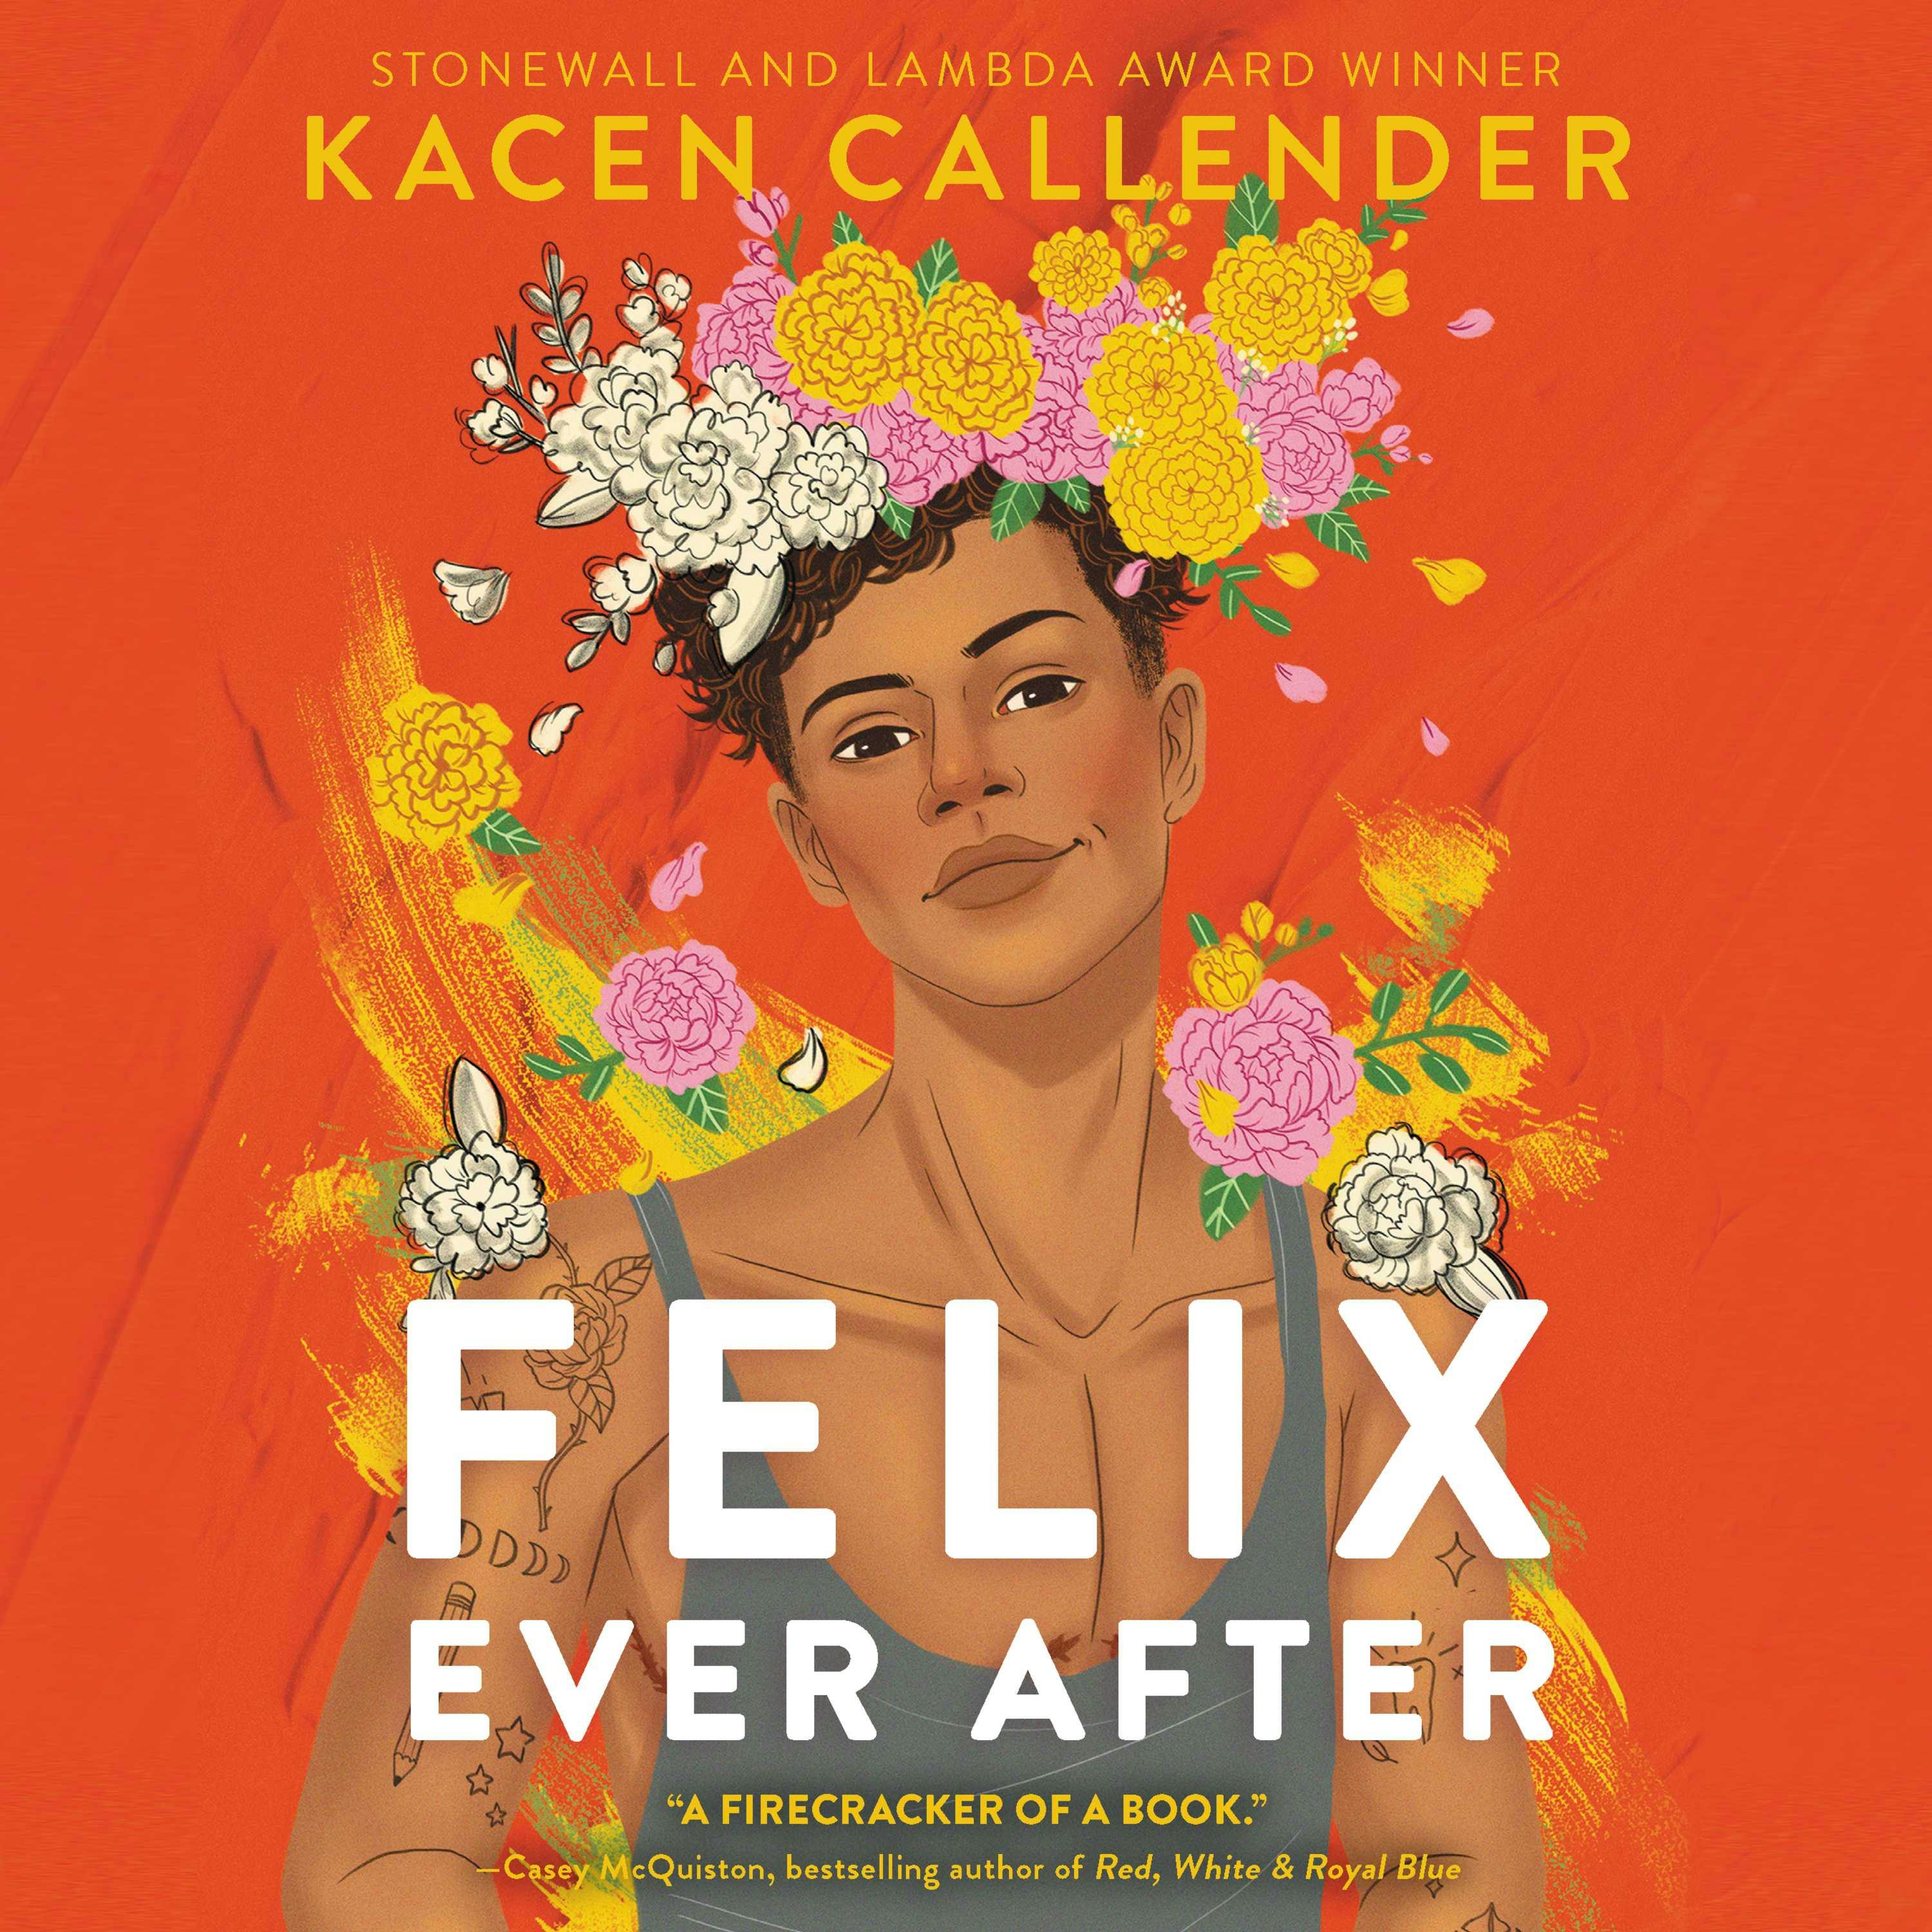 Felix Ever After - Kacen Callender